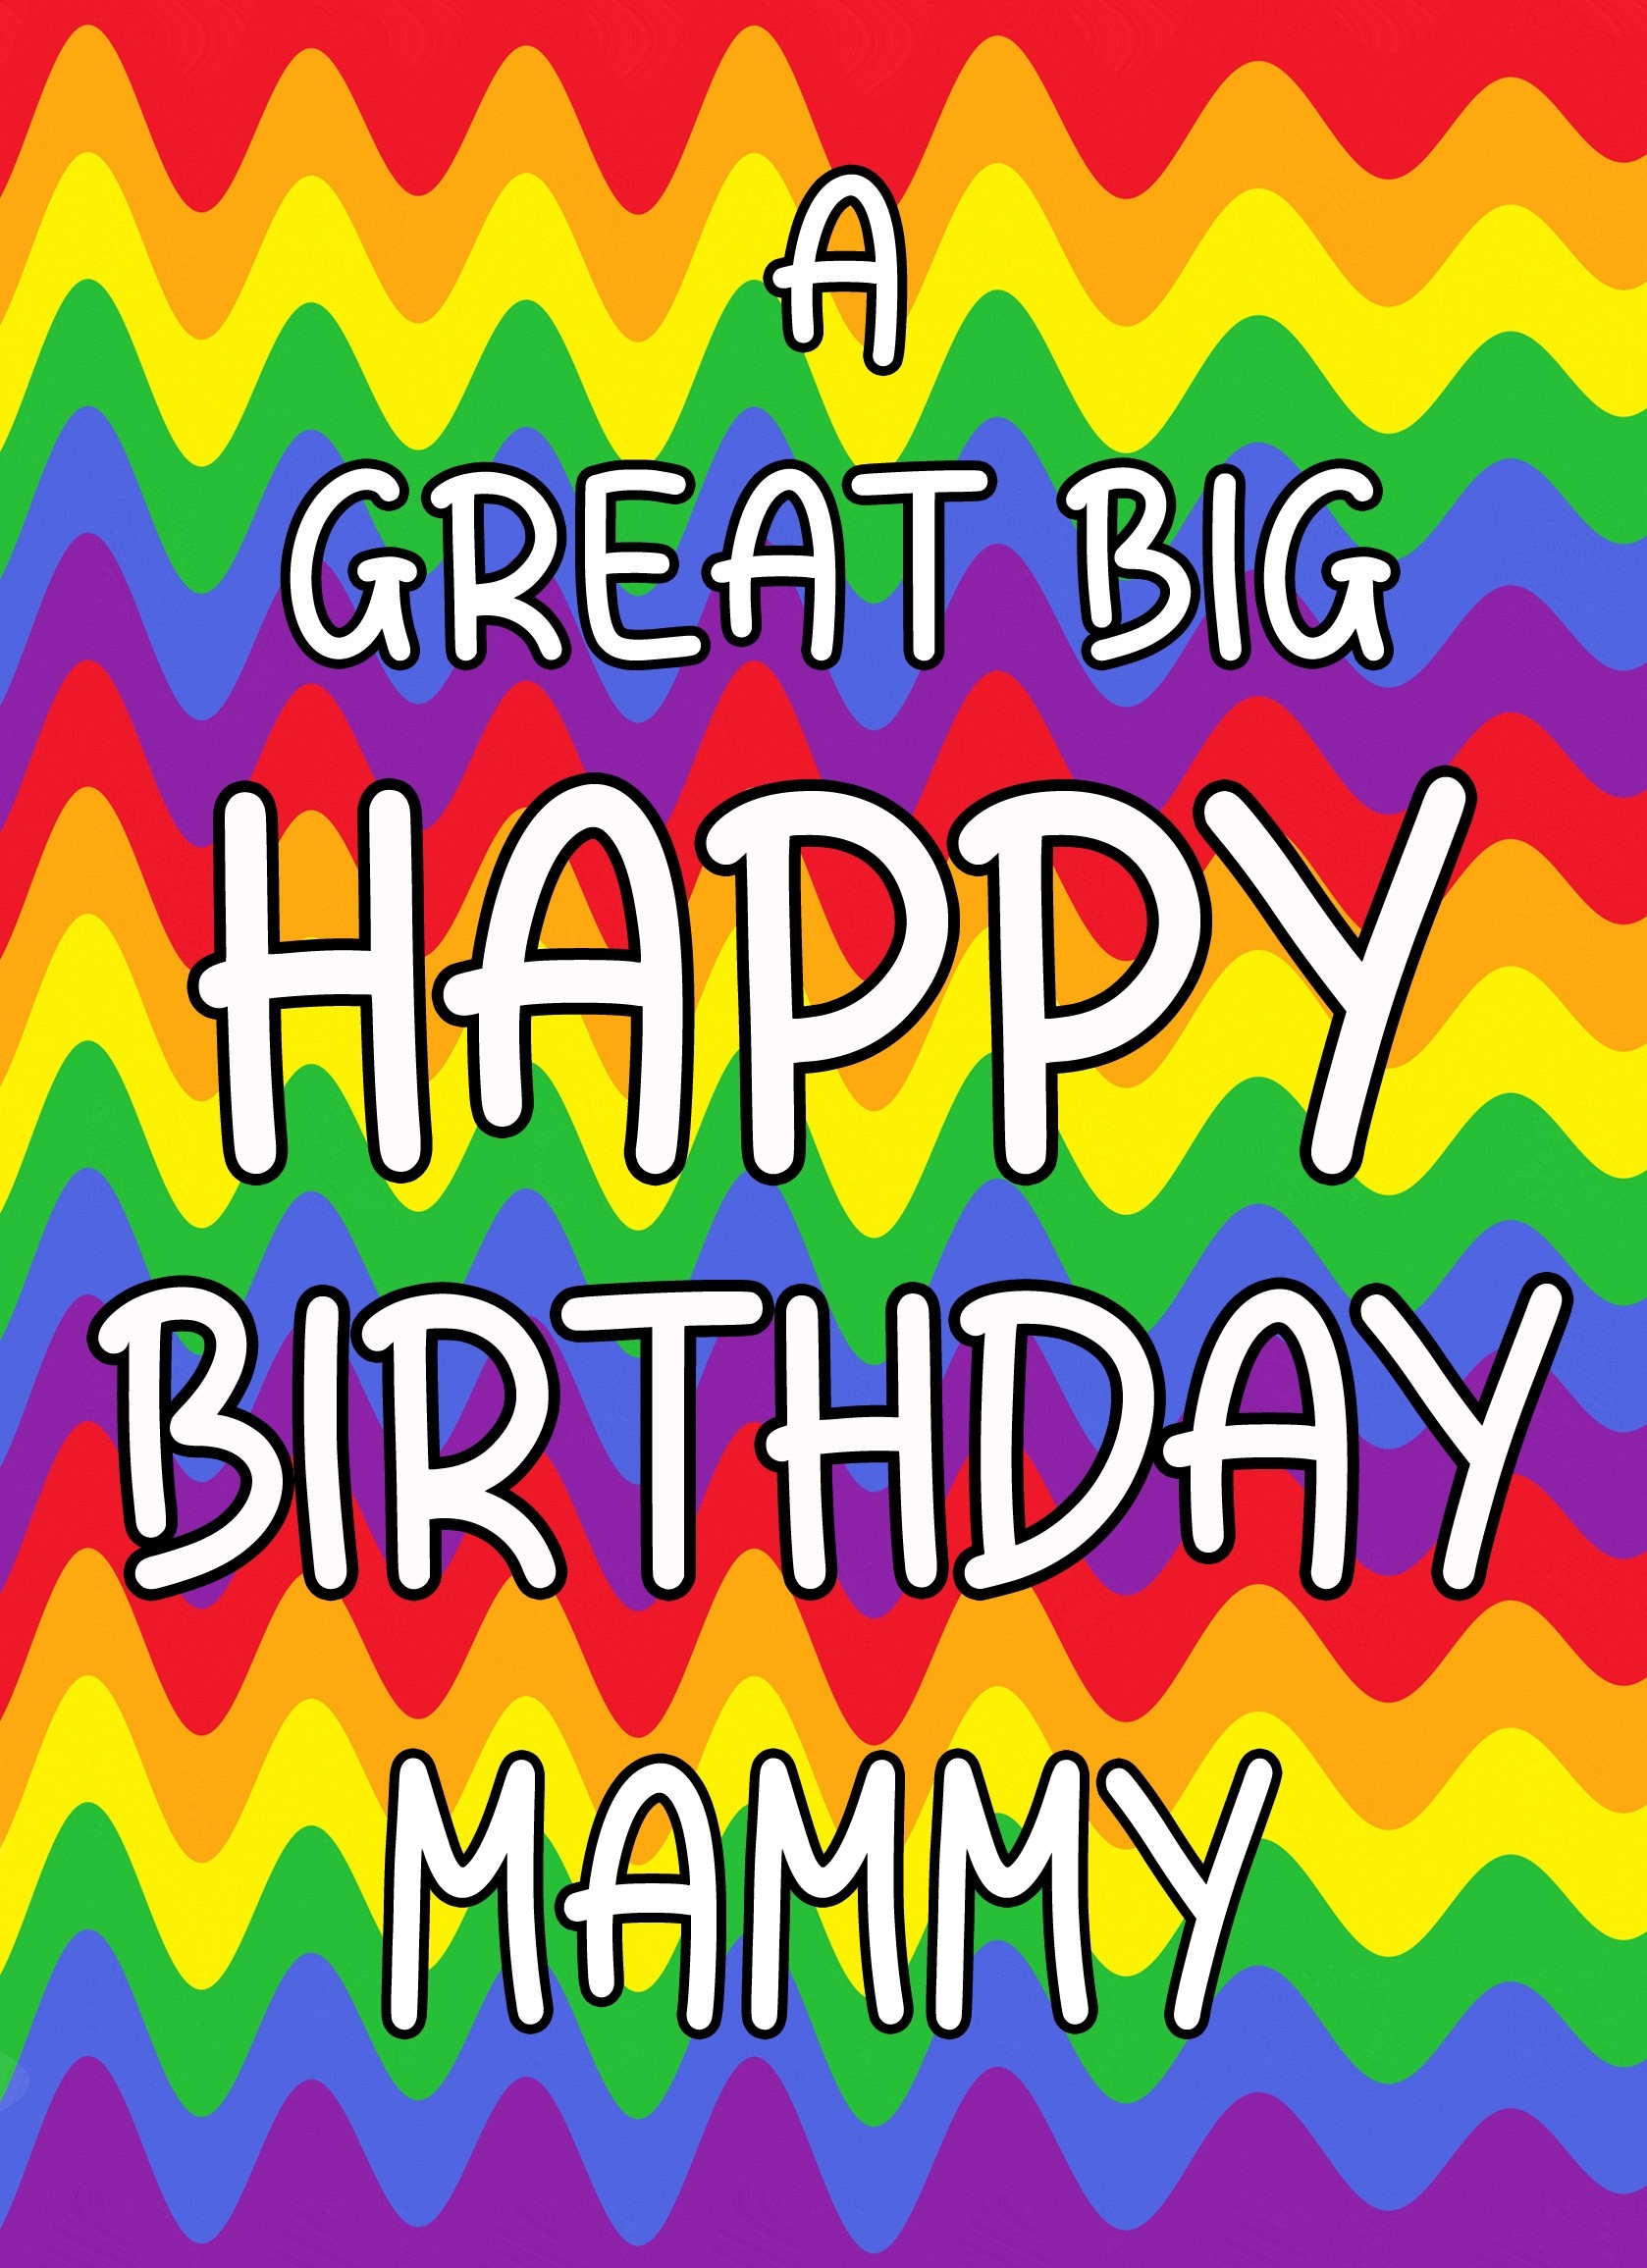 Happy Birthday 'Mammy' Greeting Card (Rainbow)